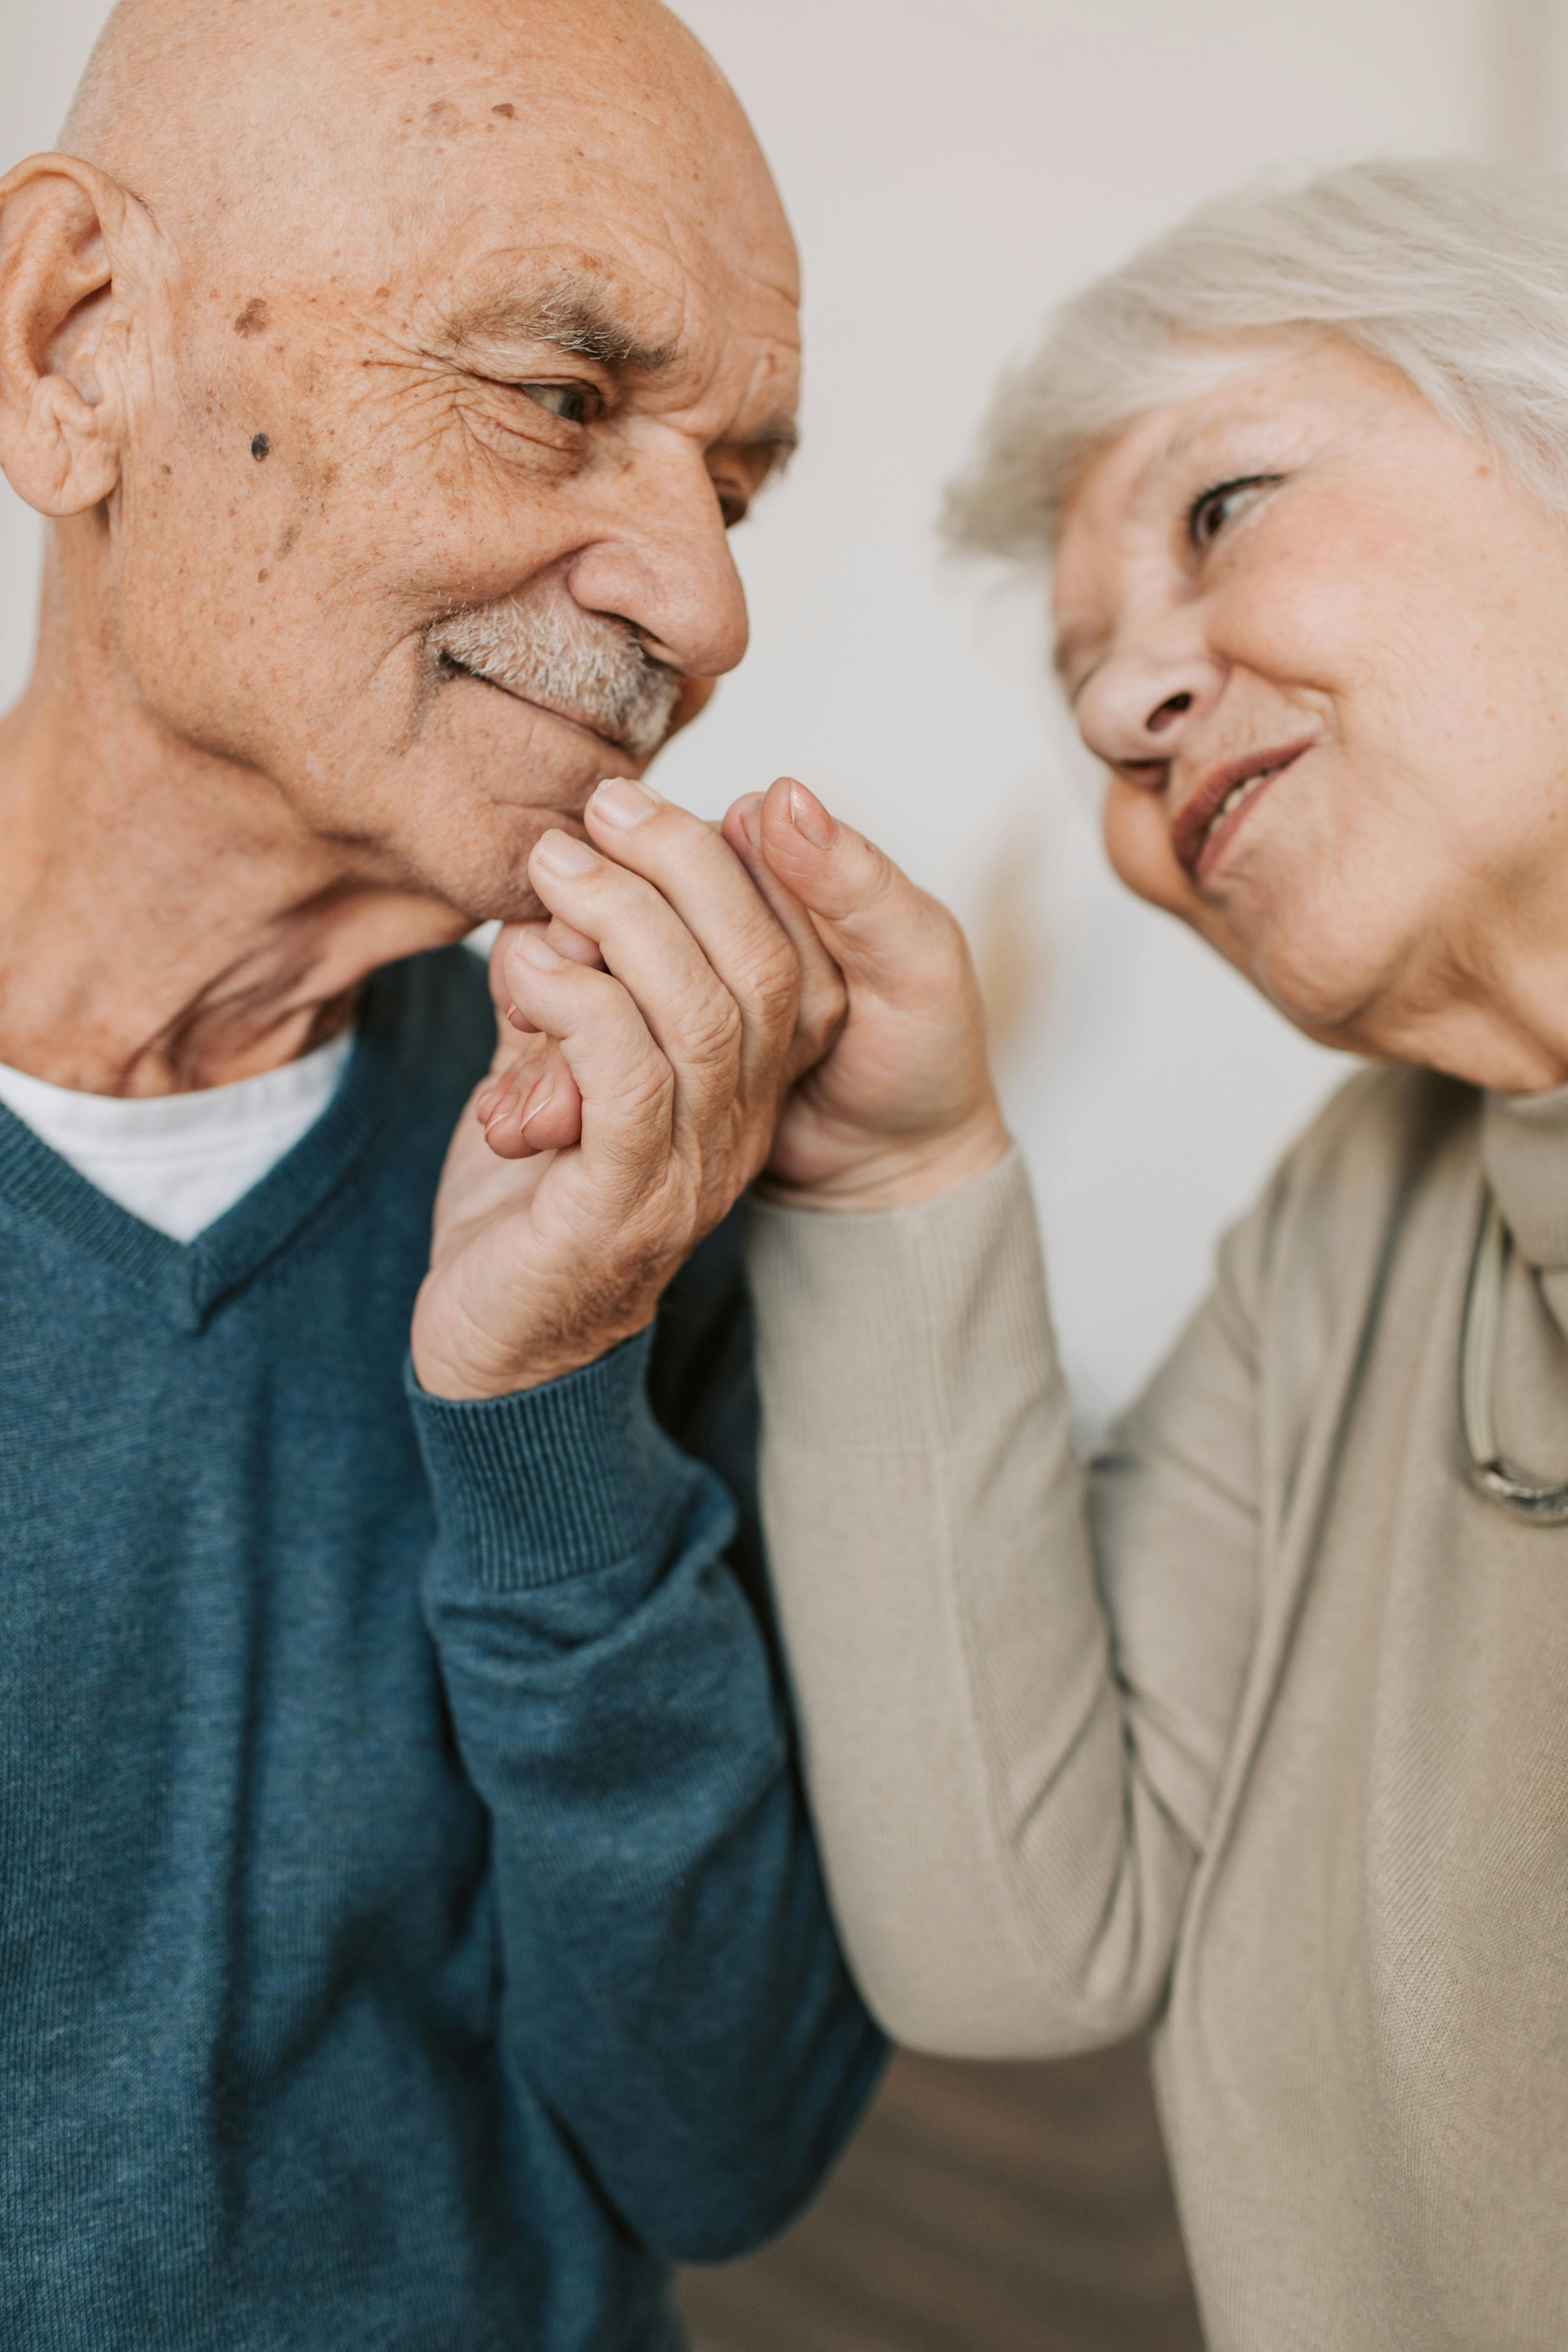 An elderly couple holding hands | Source: Pexels